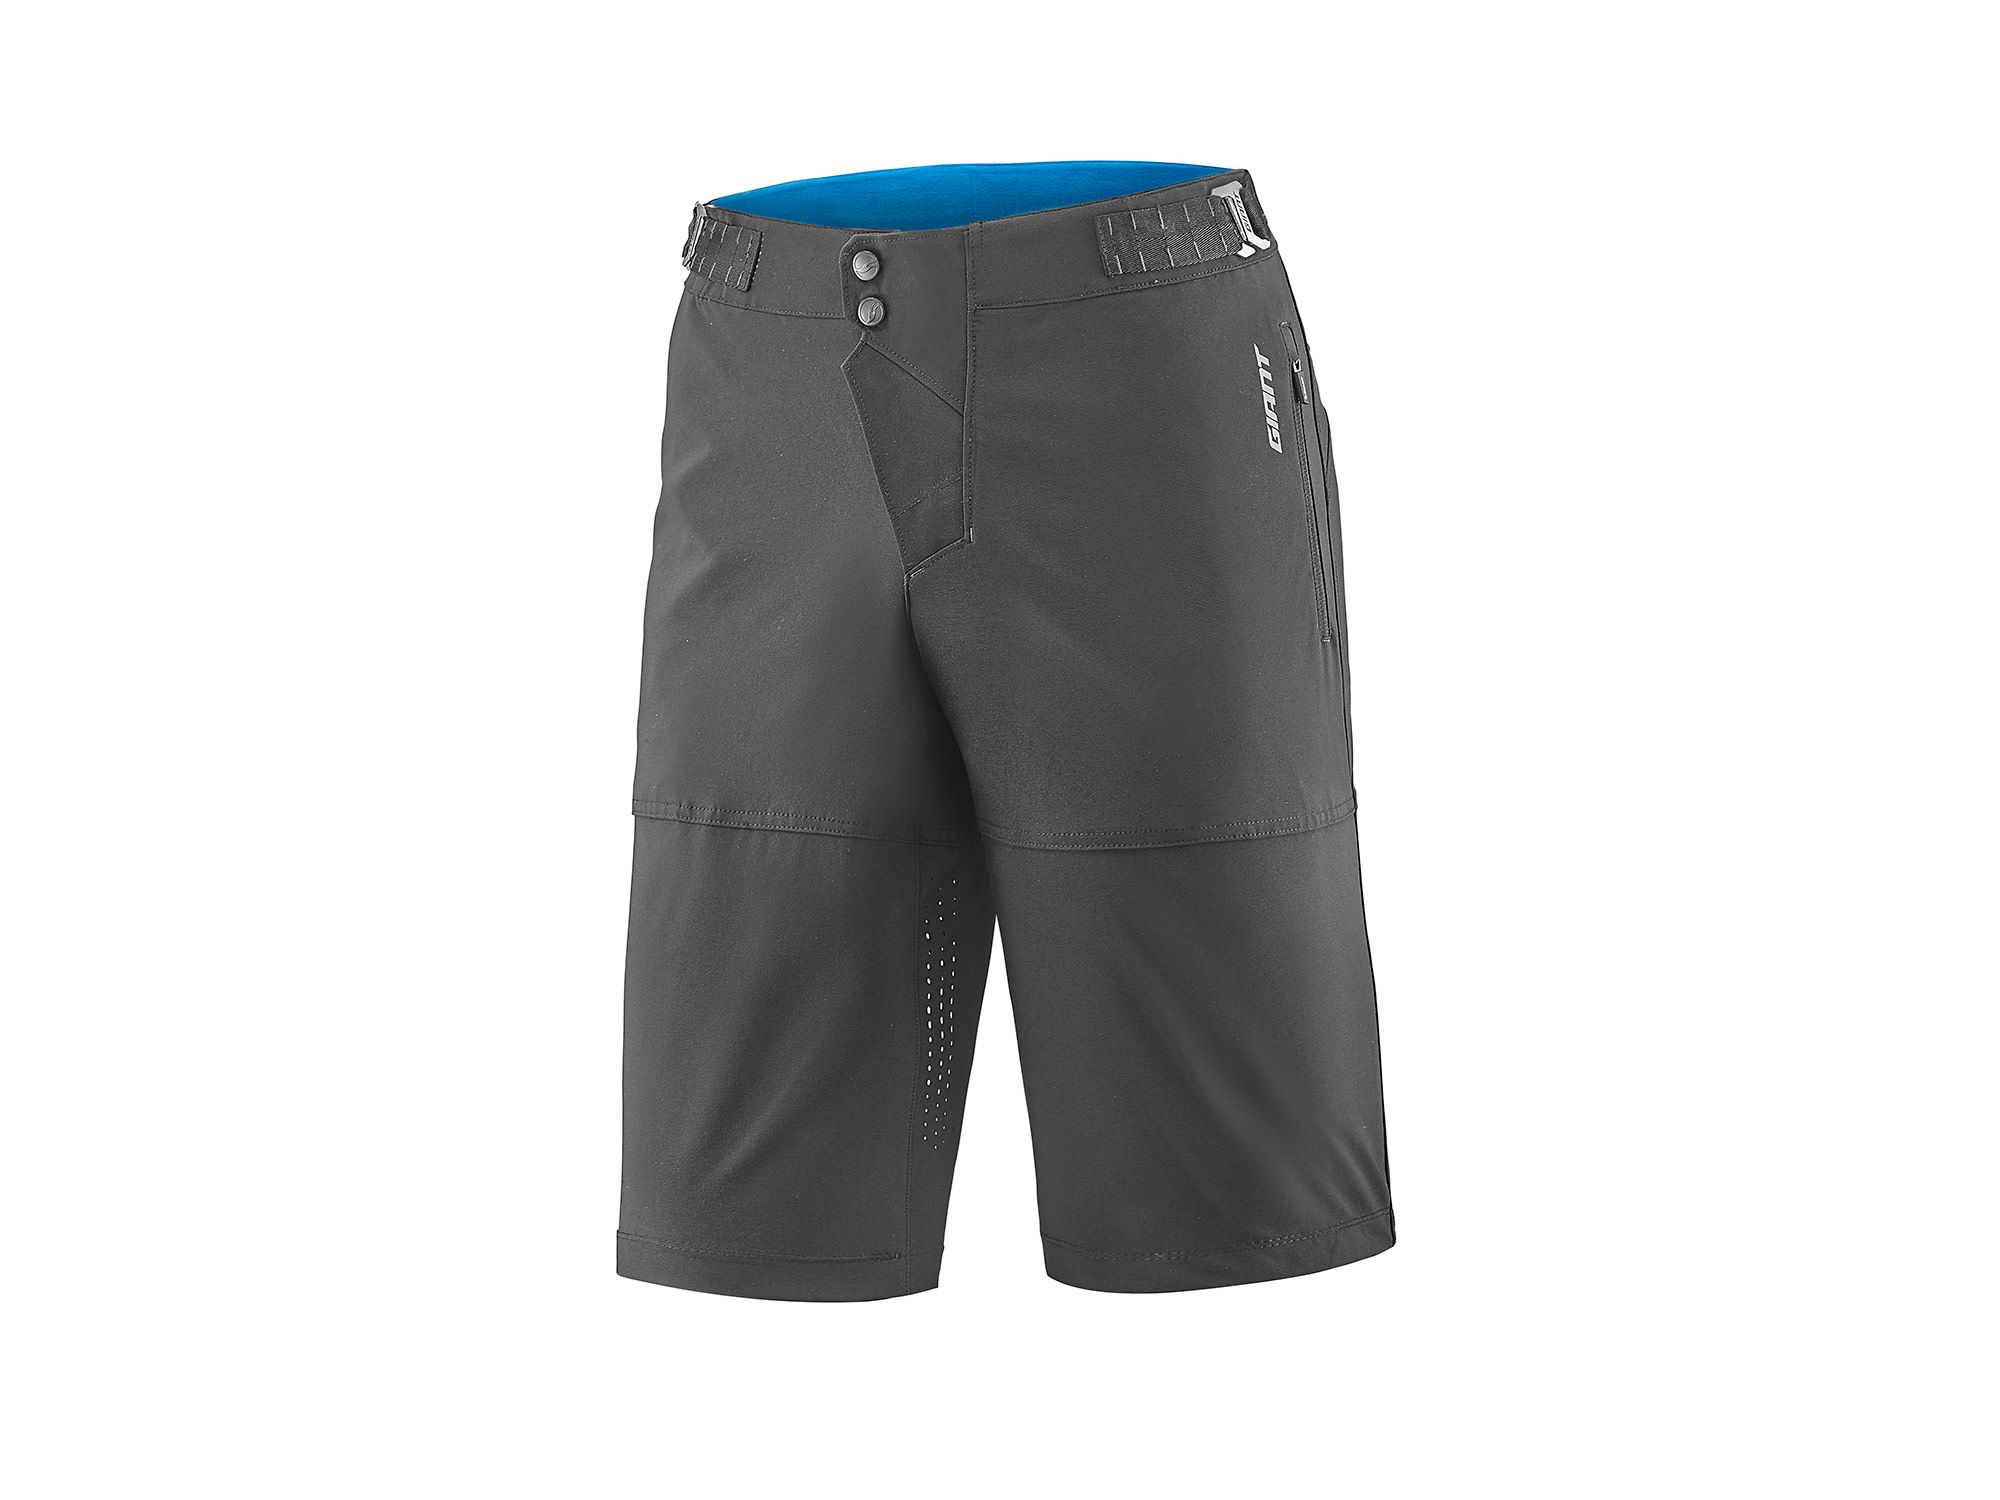 Giant Transfer Mtb Shorts Extra Large 98cm 2020 - £26 | Shorts - Baggy ...